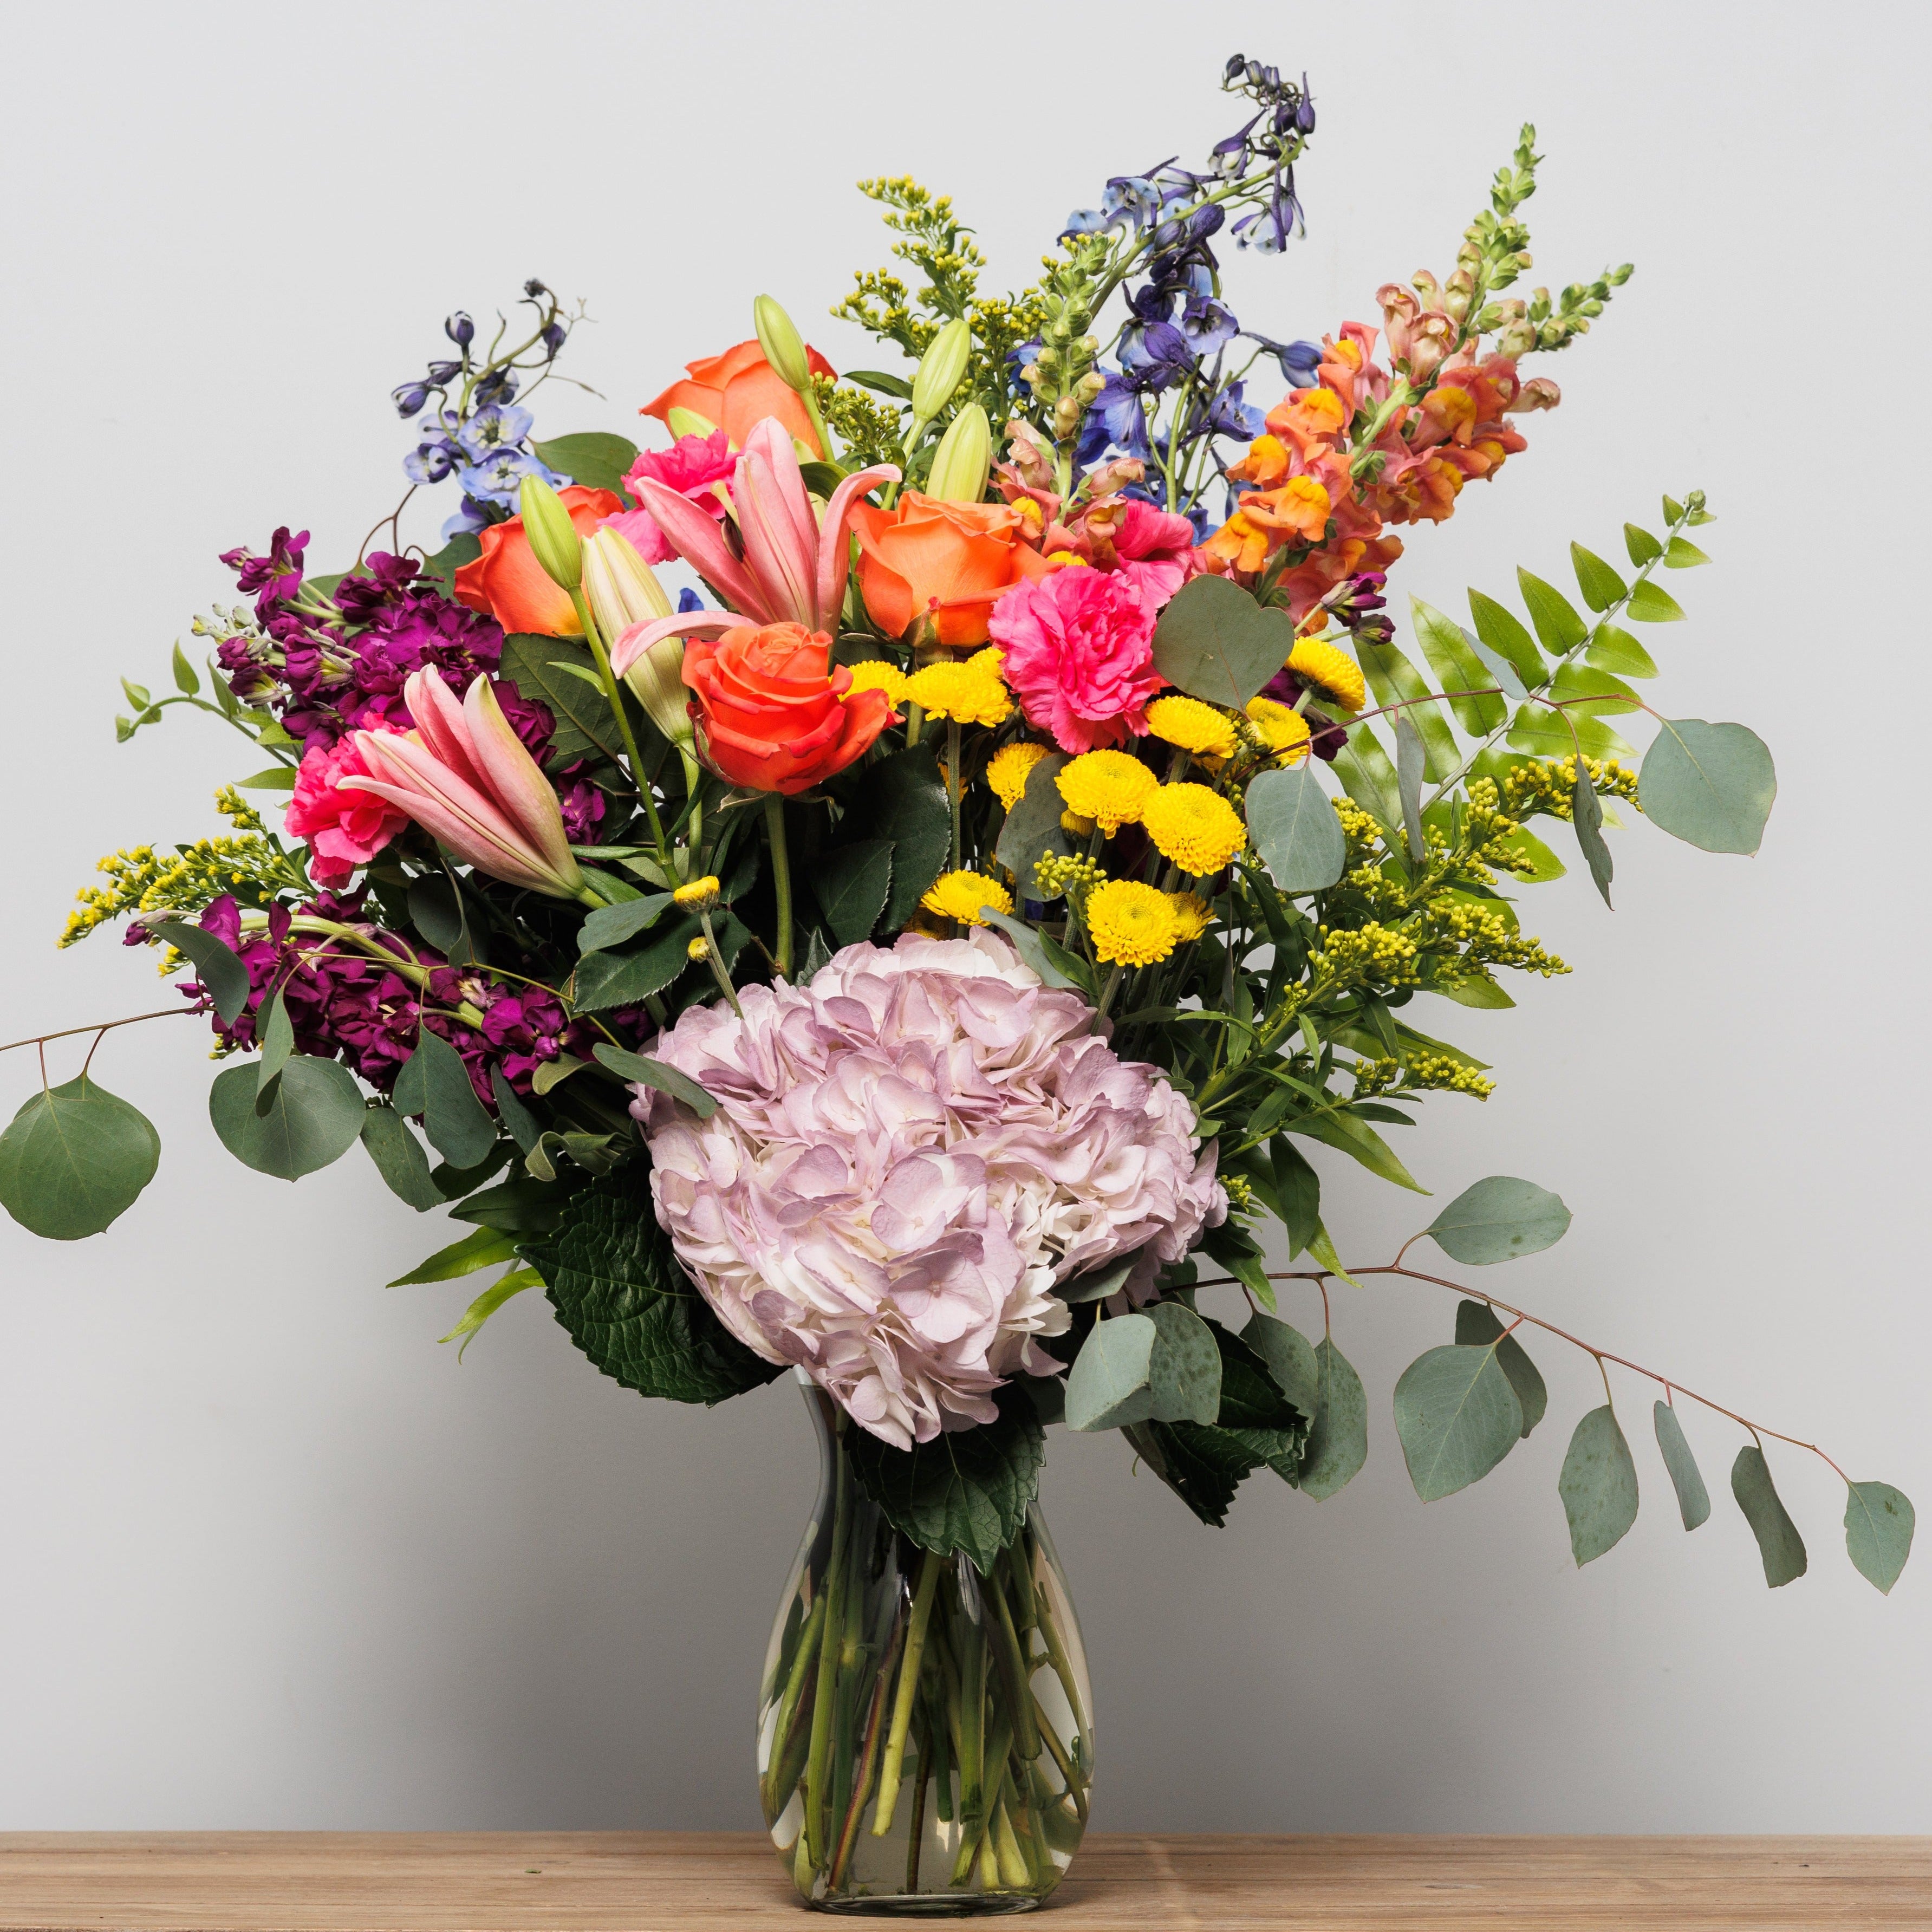 A vase arrangement with orange roses, pink lilies, orange snapdragons, delphinium, stock and hydrangea.